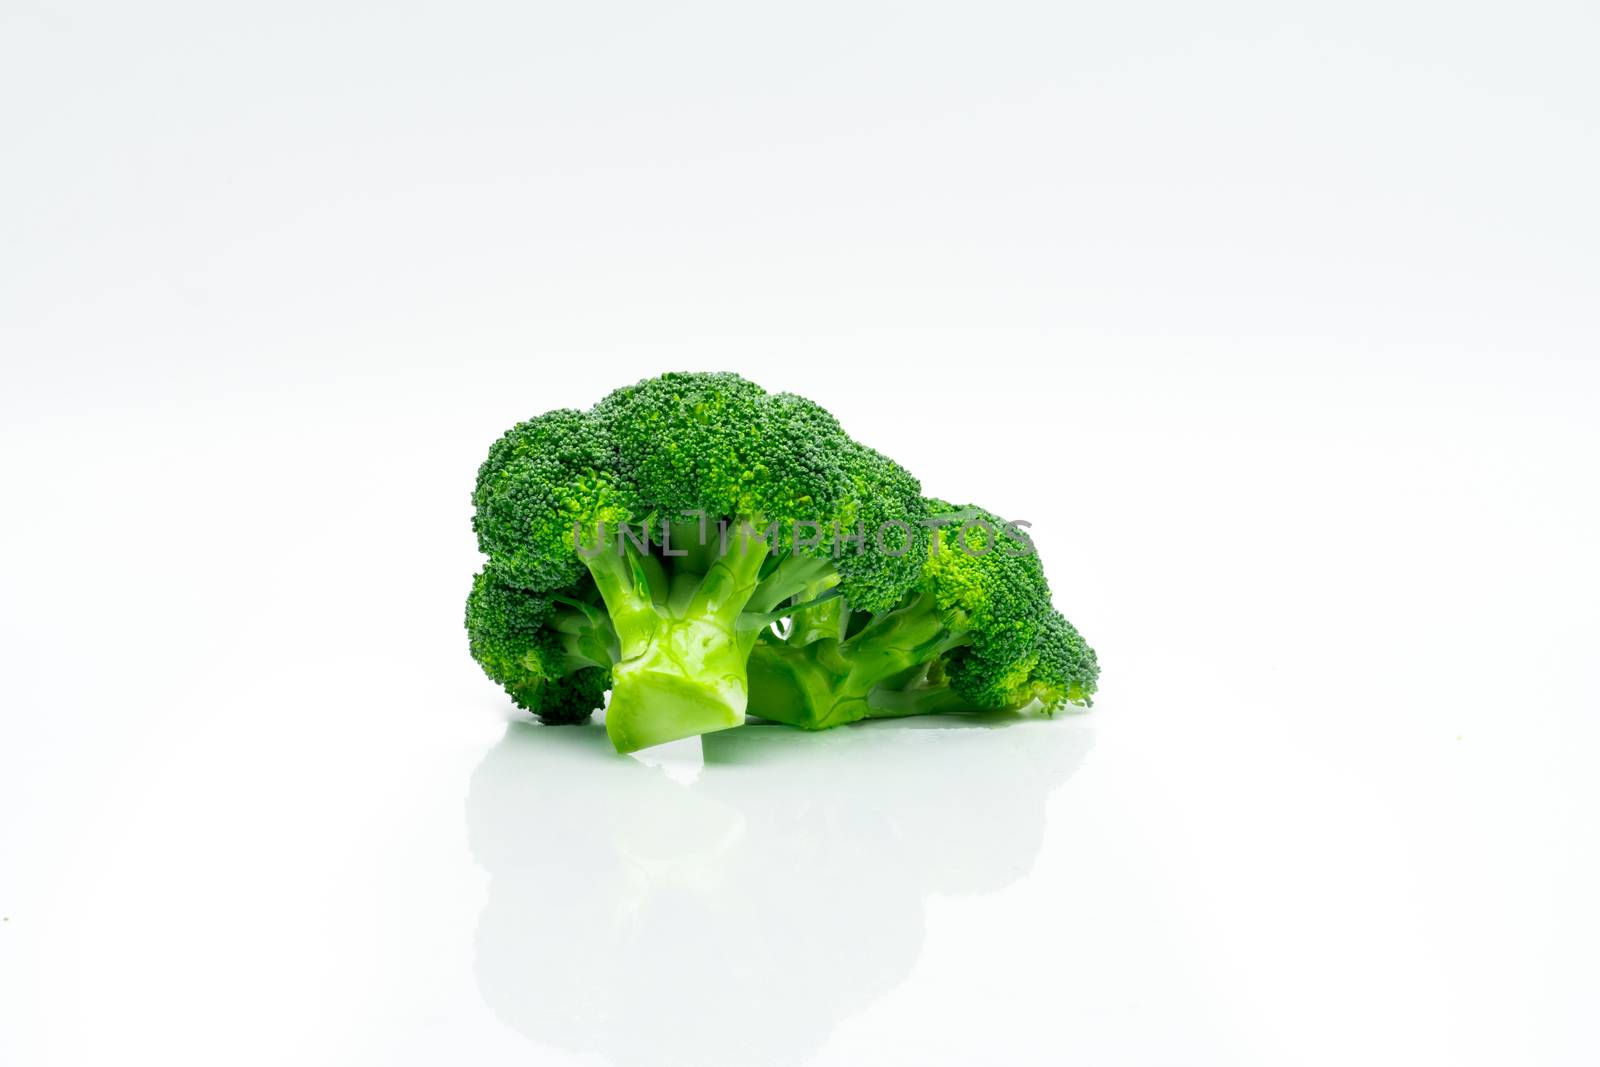 Green broccoli (Brassica oleracea). Vegetables natural source of betacarotene, vitamin c, vitamin k, fiber food, folate. Fresh broccoli cabbage isolated on white background.